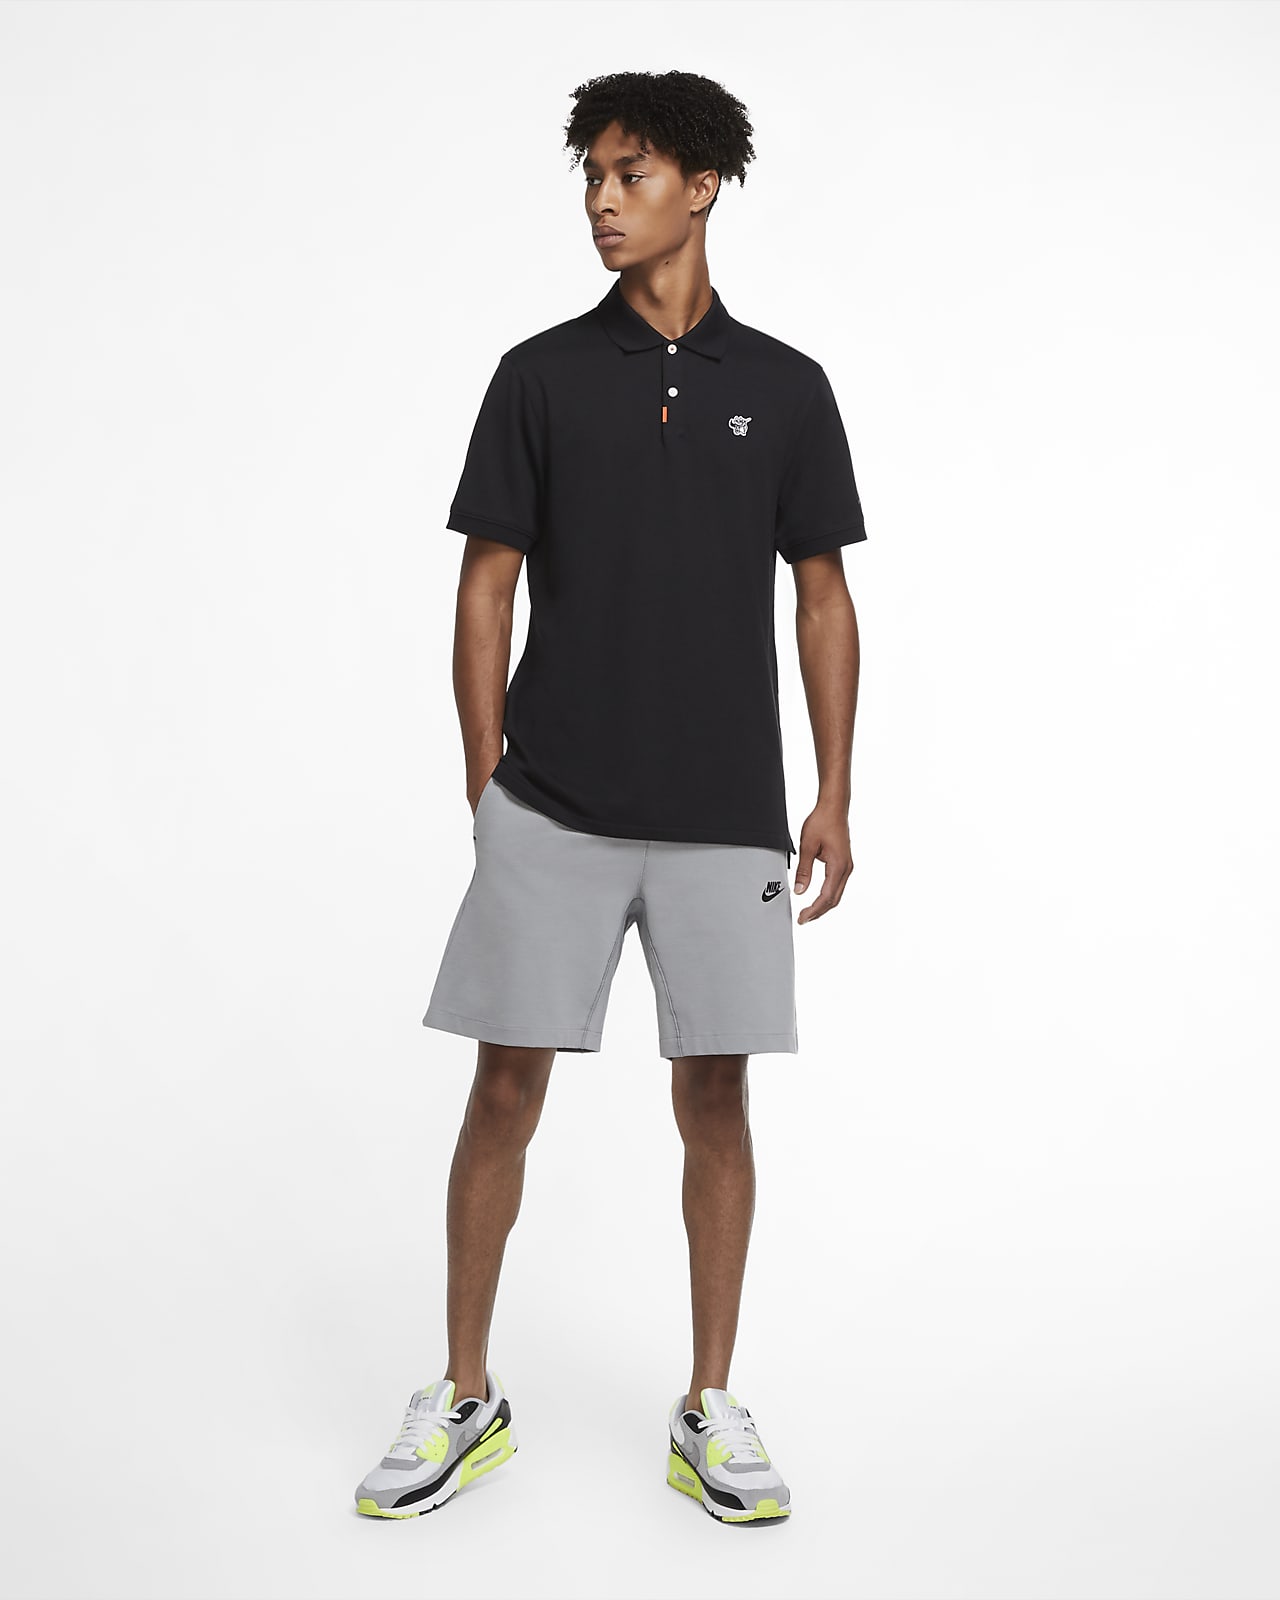 The Nike Polo Naomi Osaka Unisex Slim Fit Polo Nike Au